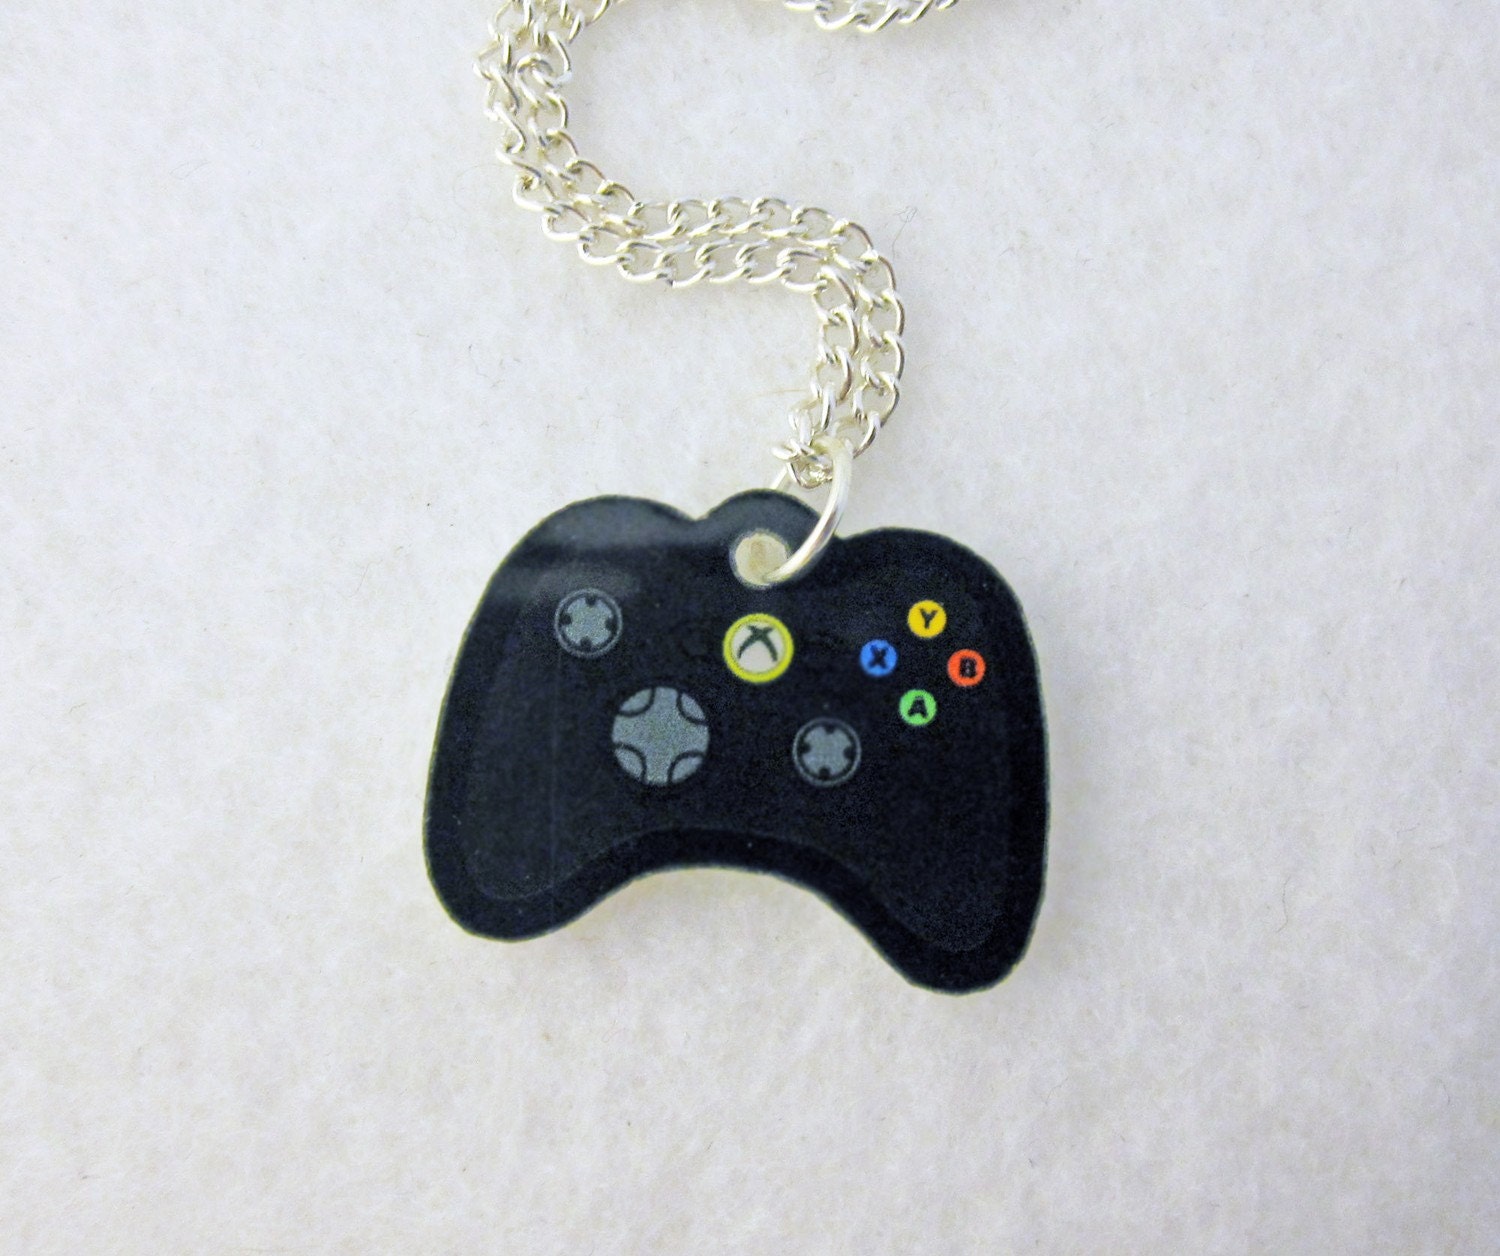 Xbox 360 Necklace